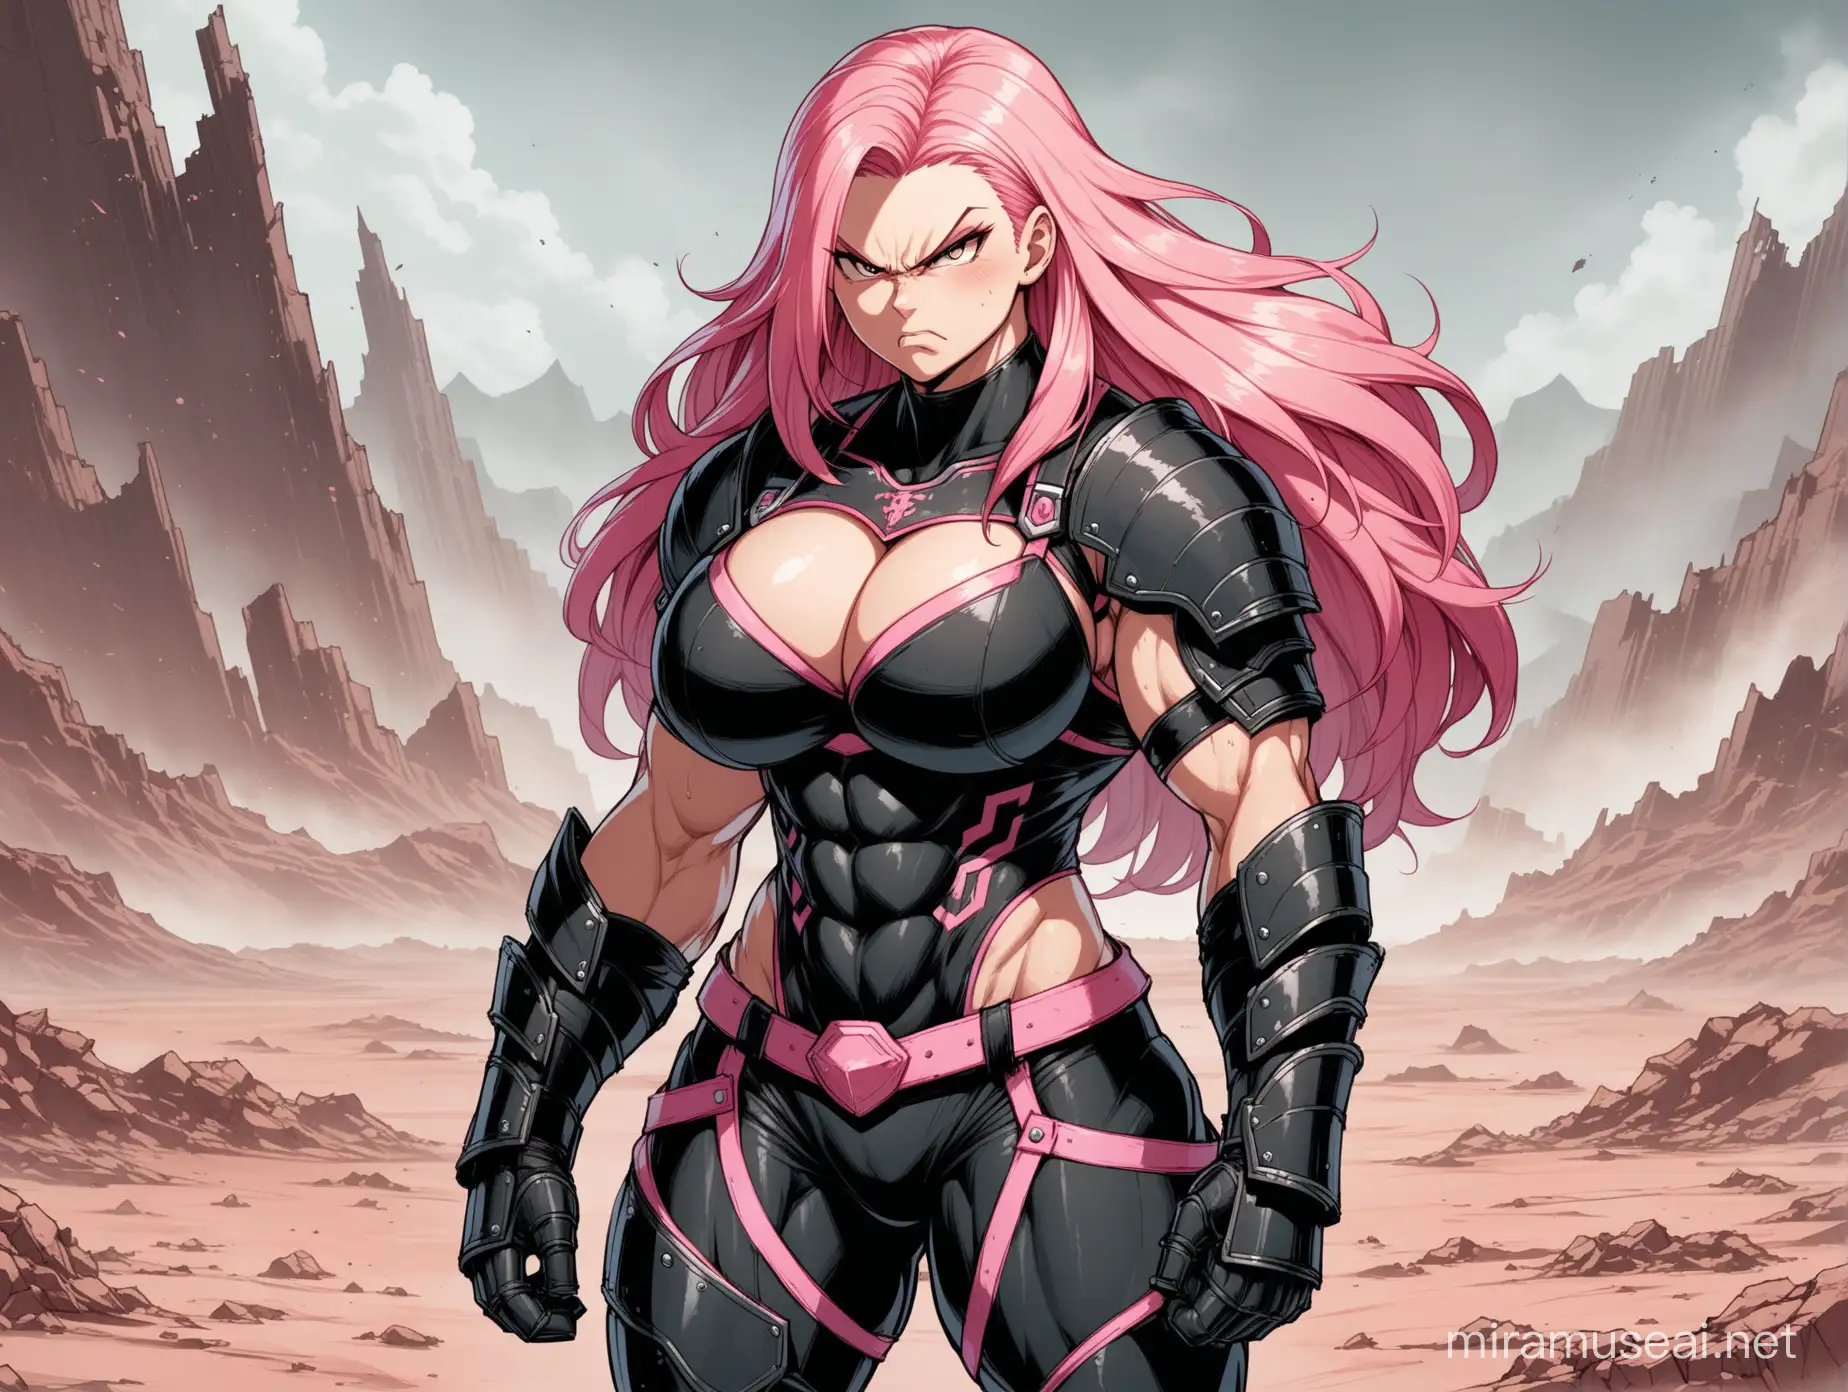 Powerful Warrior Woman in Black Armor on Desolate Wasteland